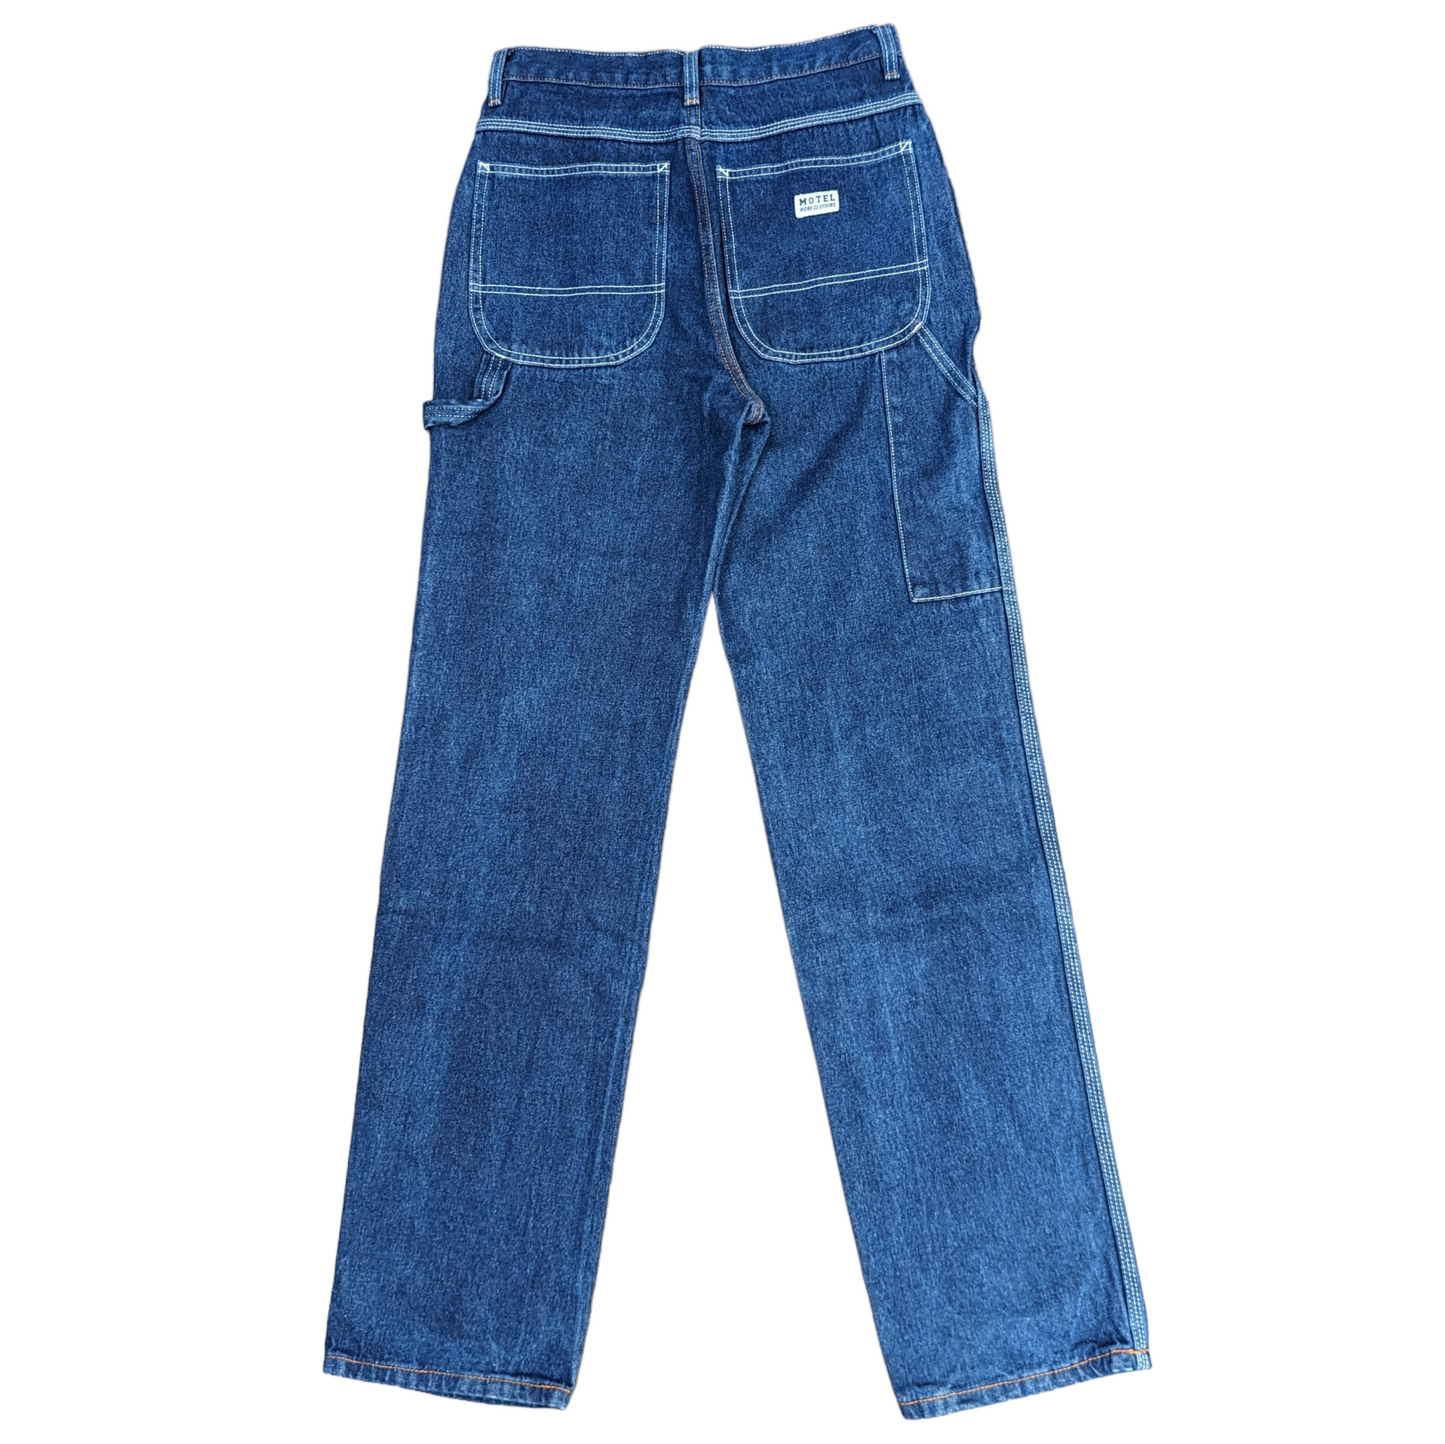 Women’s Motel Carpenter Jeans Size UK 10 W29 L32